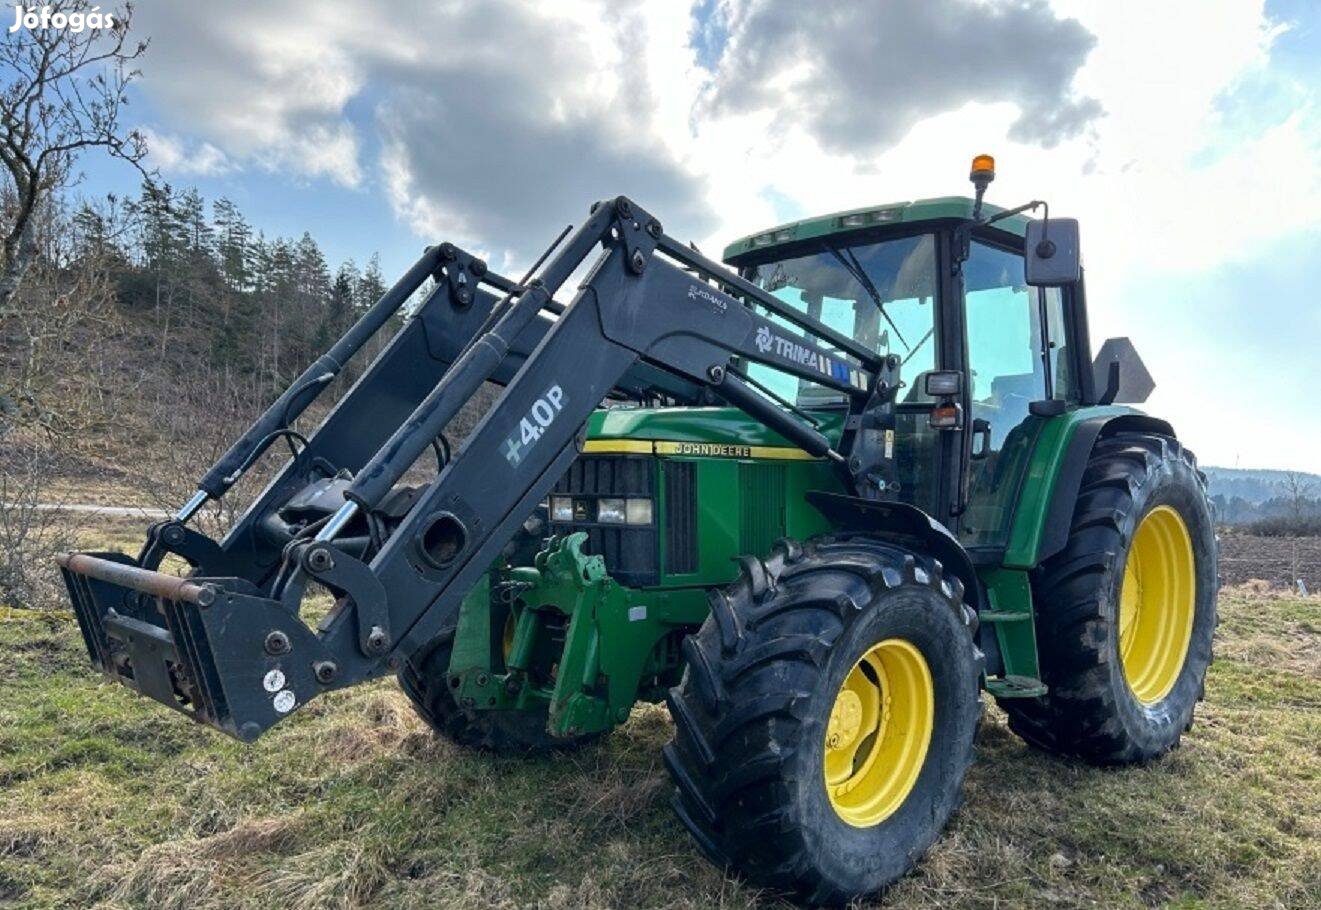 John Deere 6310 traktor